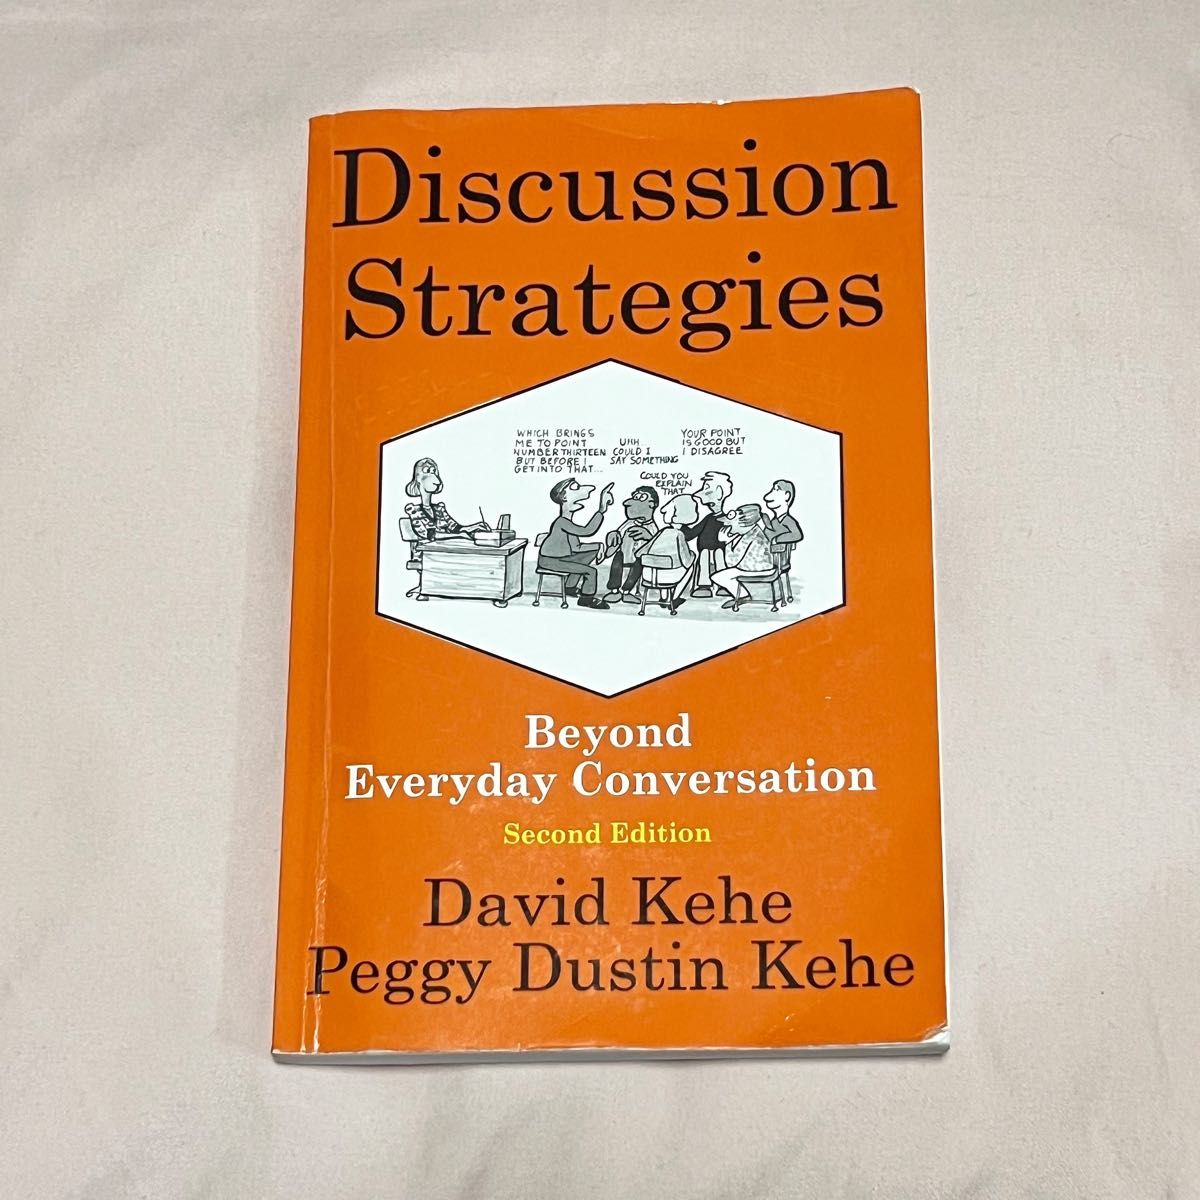 Discussion Strategies Beyond Everyday Conversation